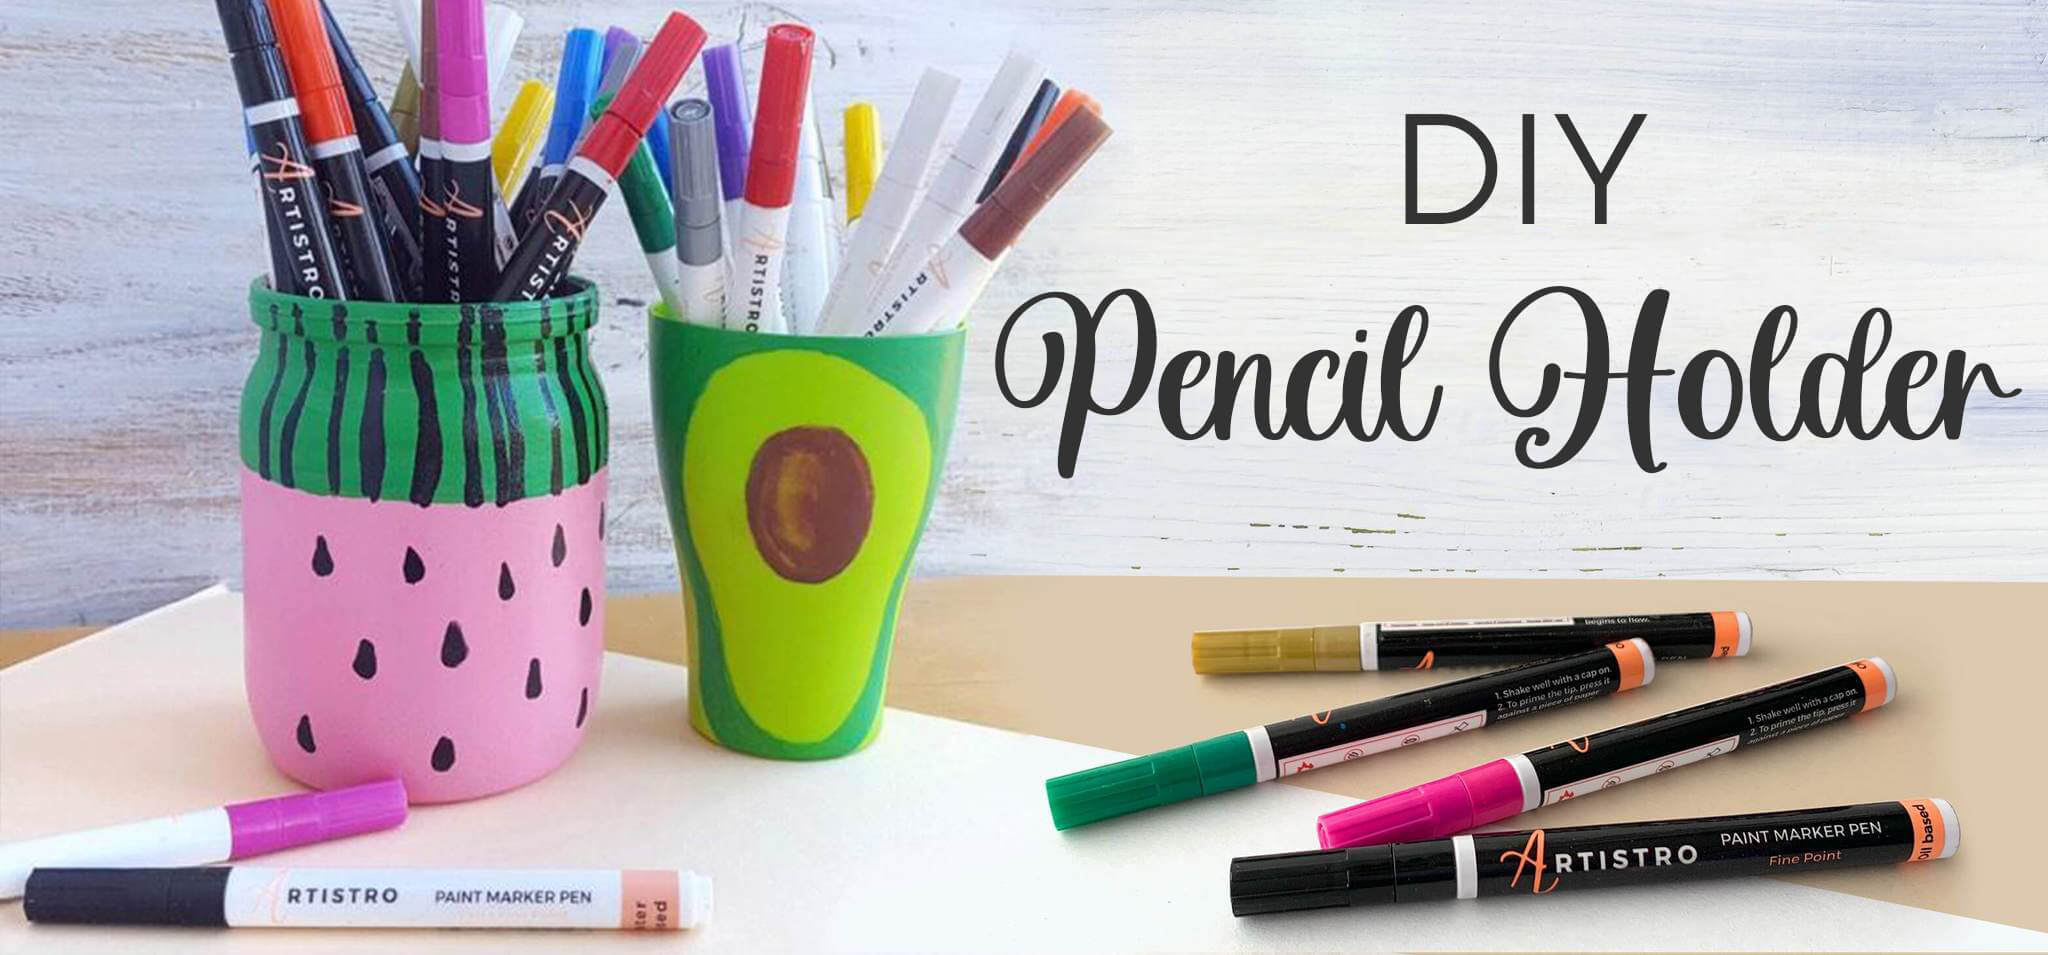 DIY Pencil Holder: Avocado & Watermelon Pencil Holder Craft Ideas